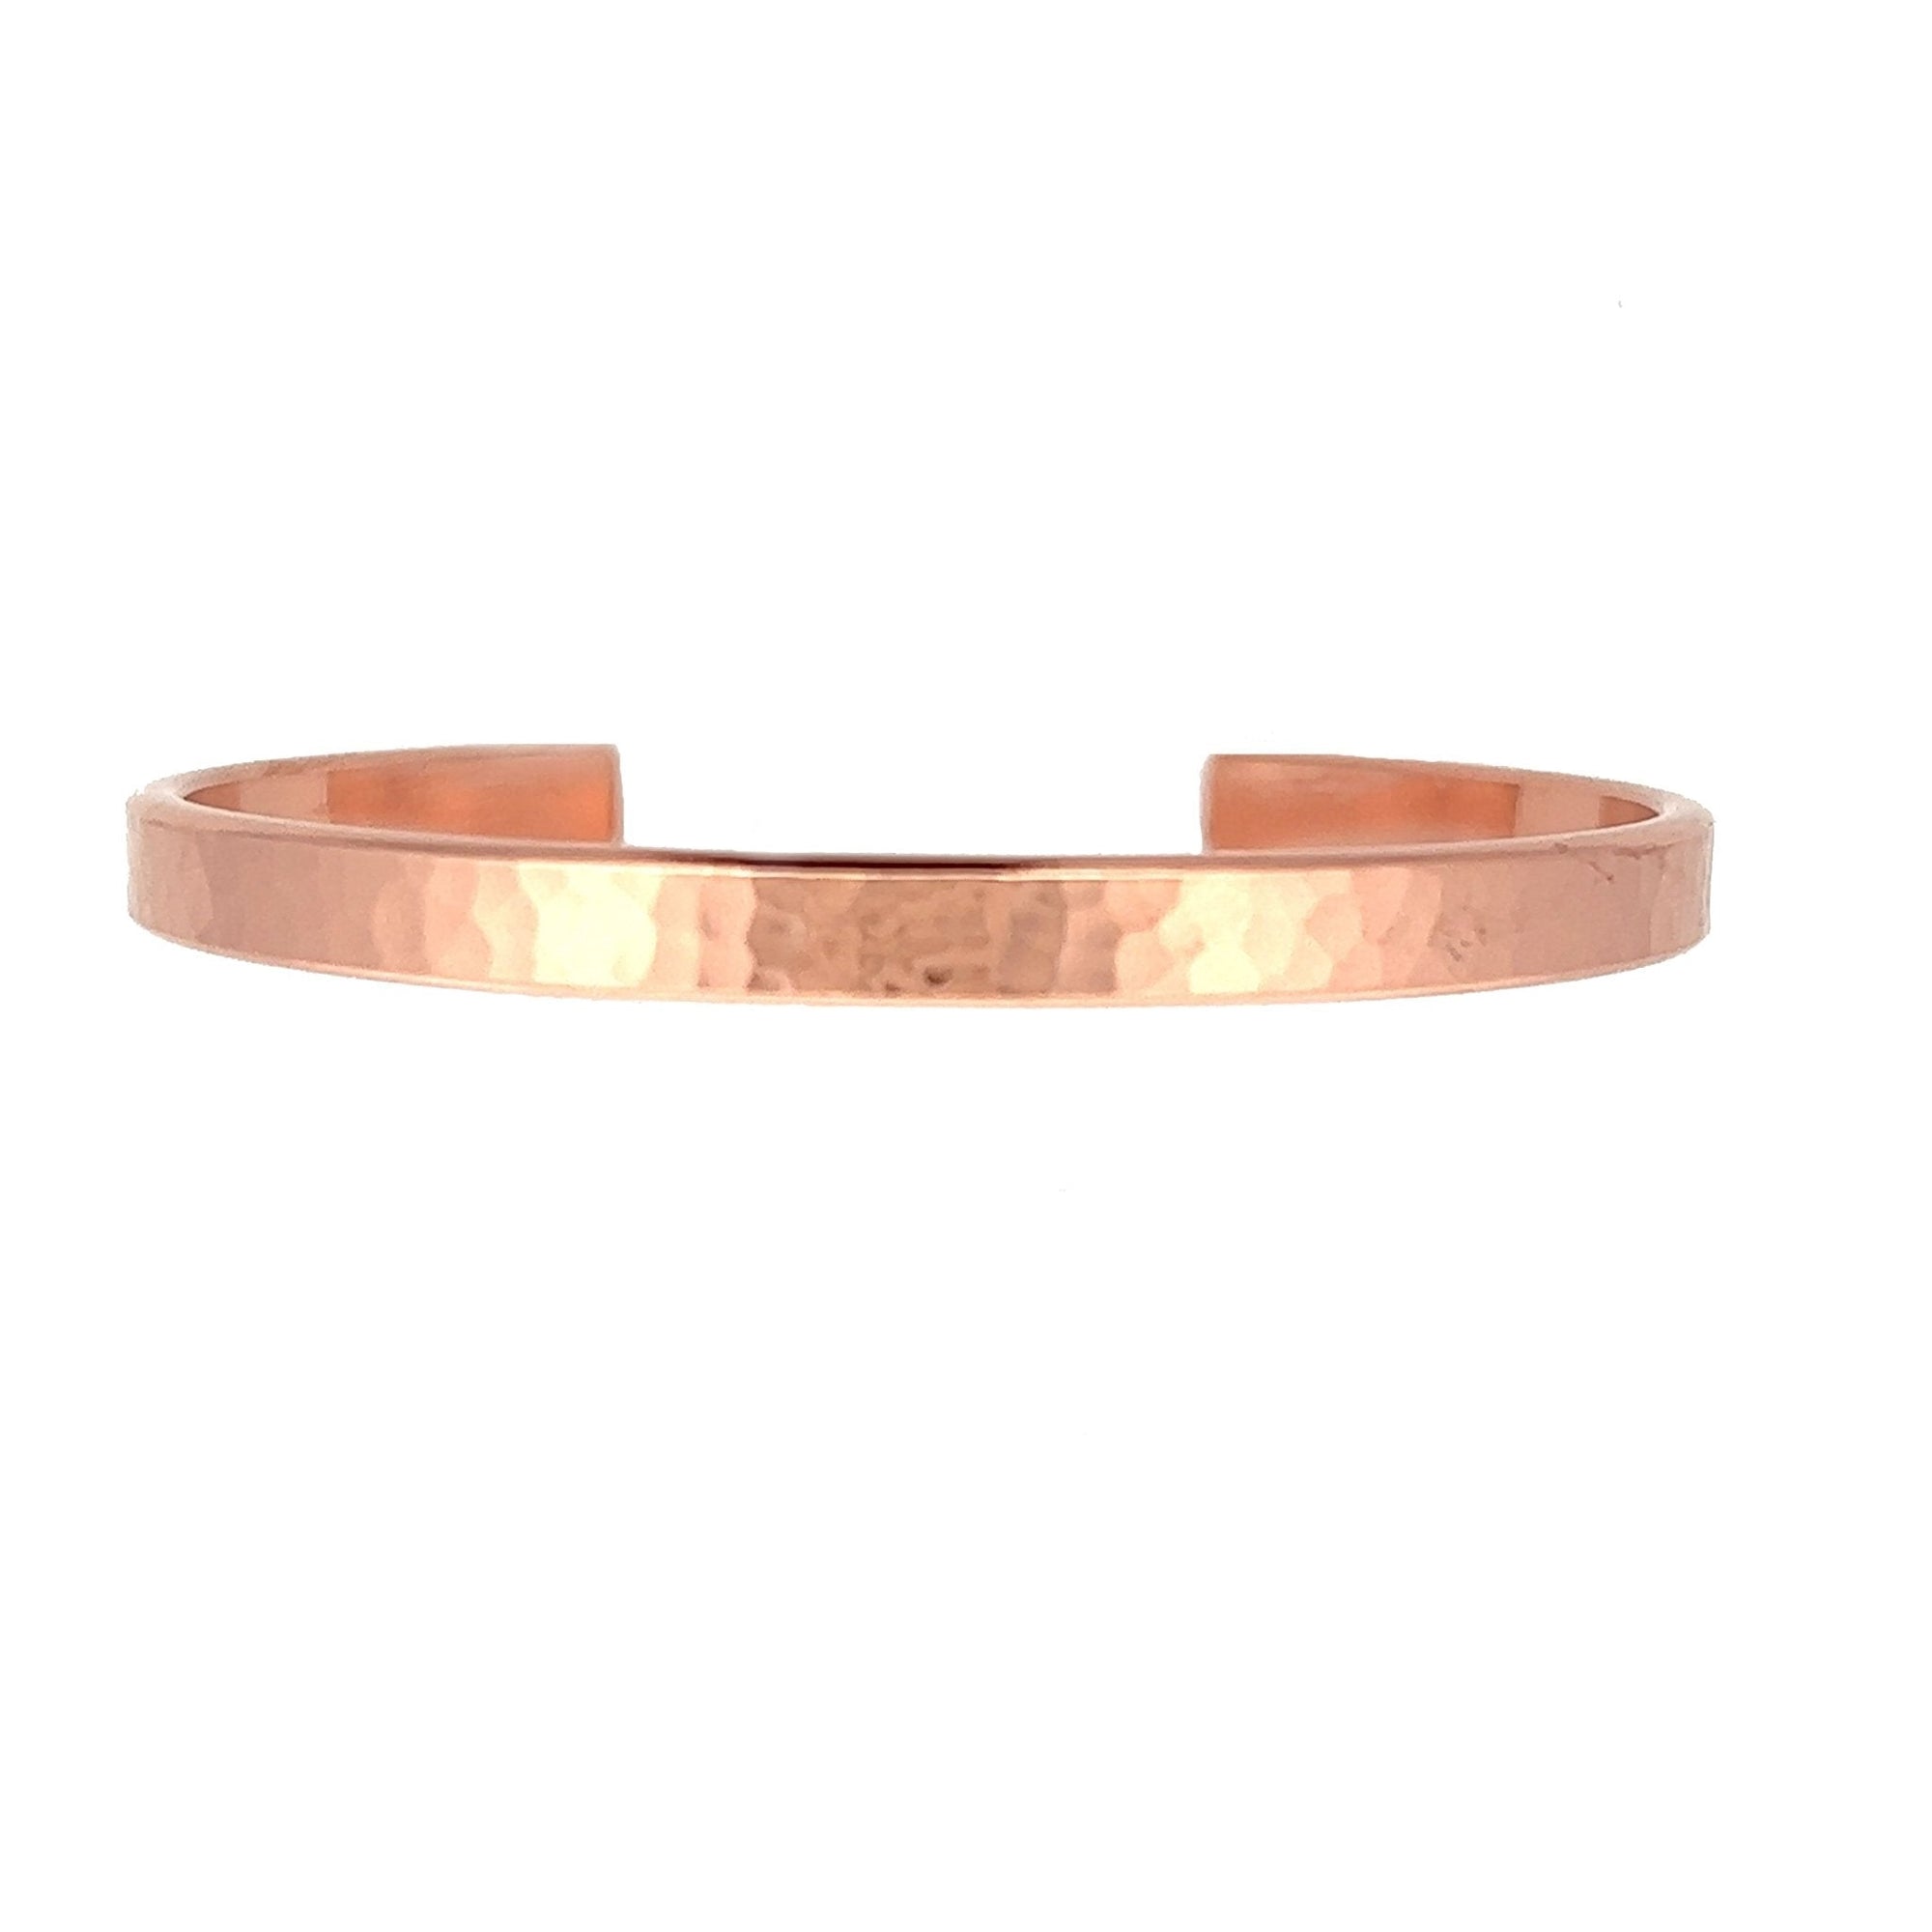 Detail of 4mm Wide Hammered Copper Cuff Bracelet